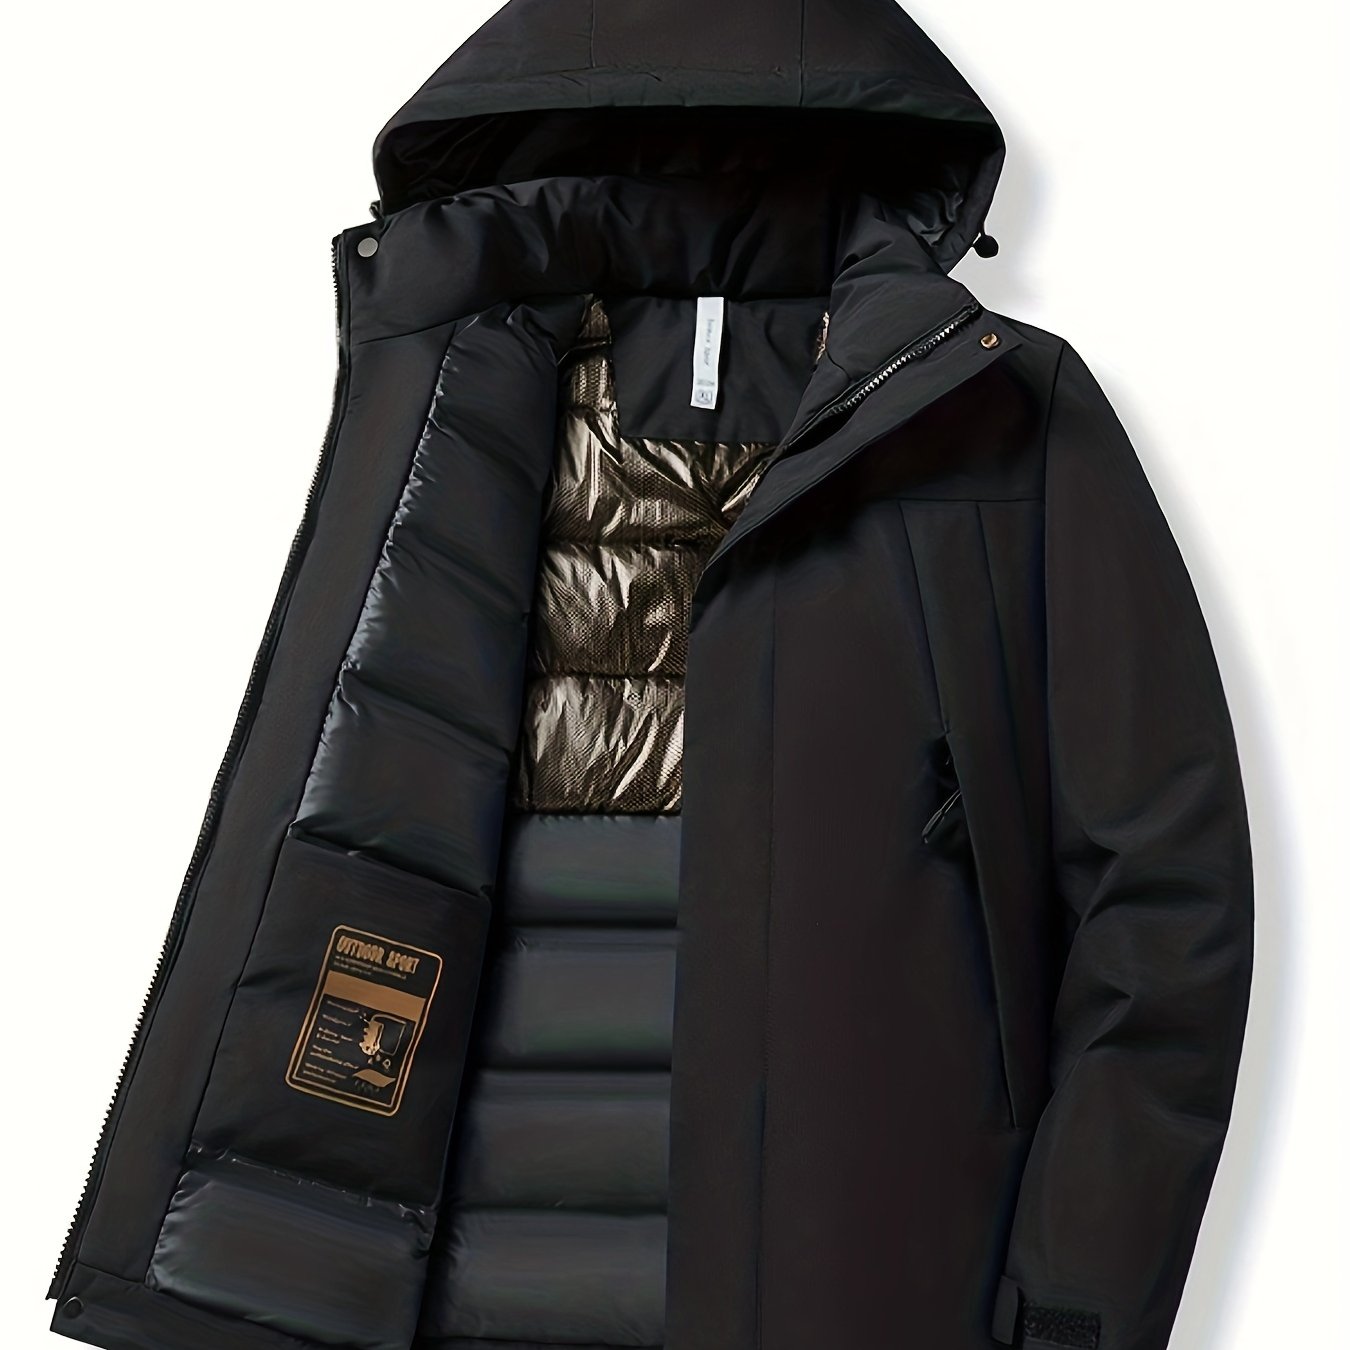 vlovelaw  Contrast Color Thermal Windproof Hooded Jacket, Zipper Pocket Waterproof Warm Jacket Coat For Fall & Winter, Women's Clothing